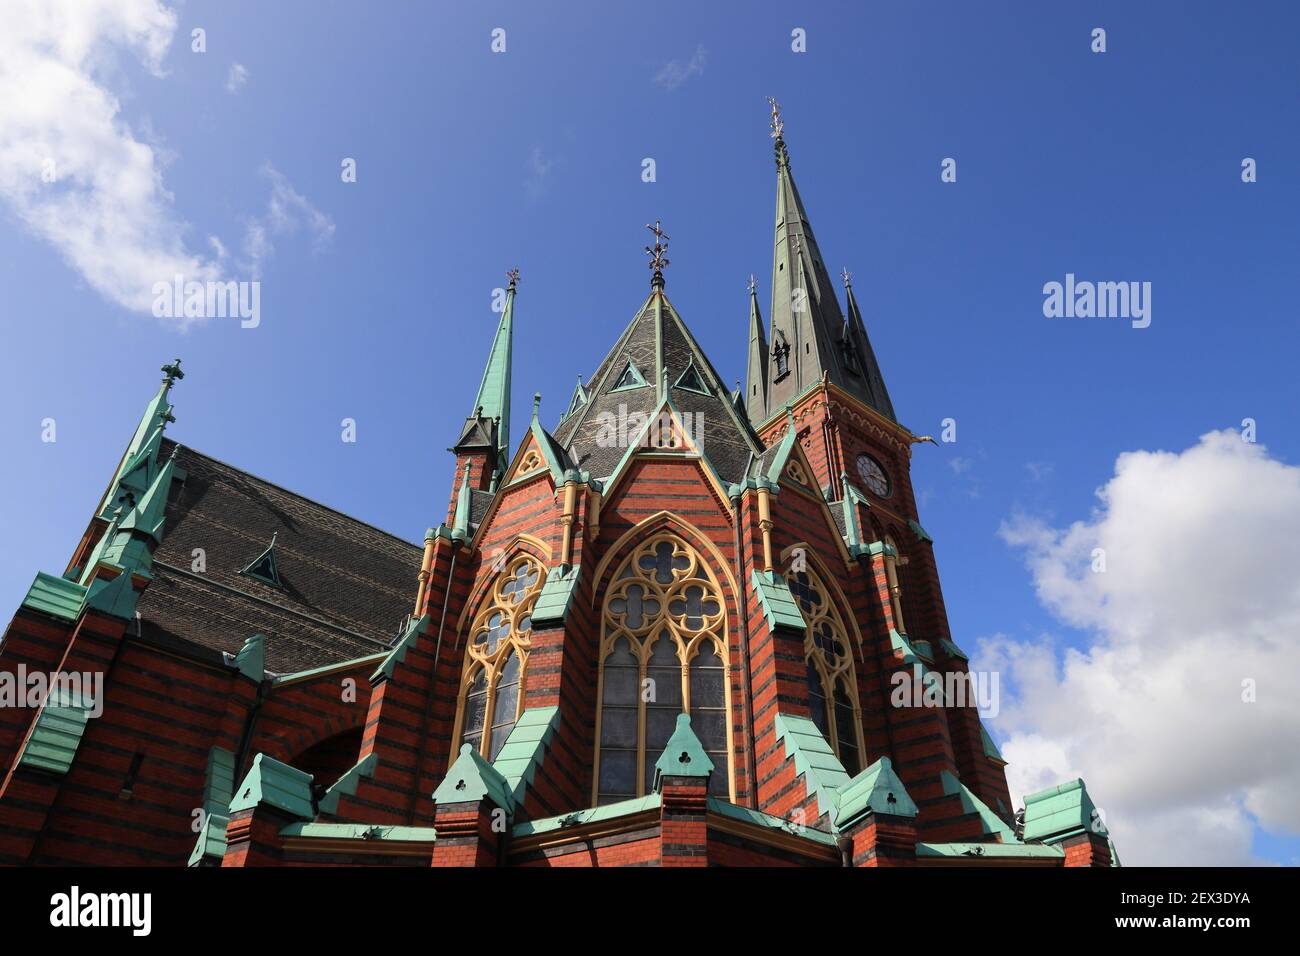 Gothenburg city in Sweden. Olivedal district landmark - Oscar Fredriks Kyrka (Oscar Fredrik Church). Neo Gothic architecture style. Stock Photo